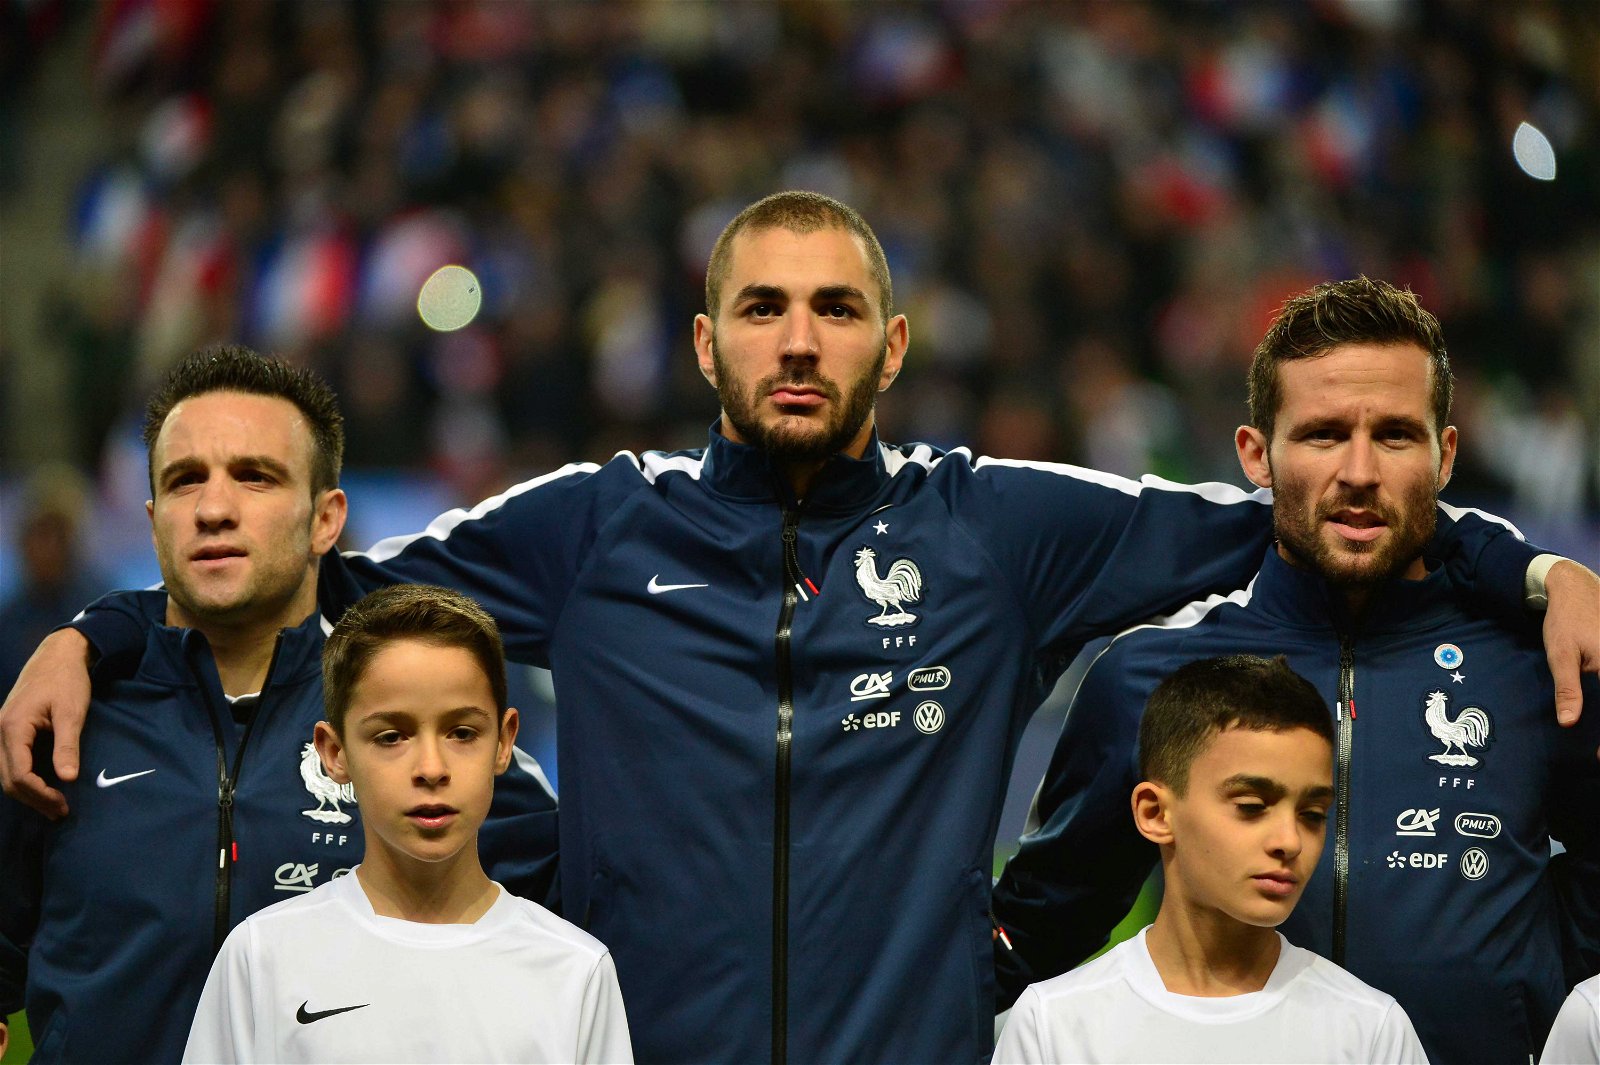 Real Madrid star Karim Benzema snubbed by France & Algeria national teams